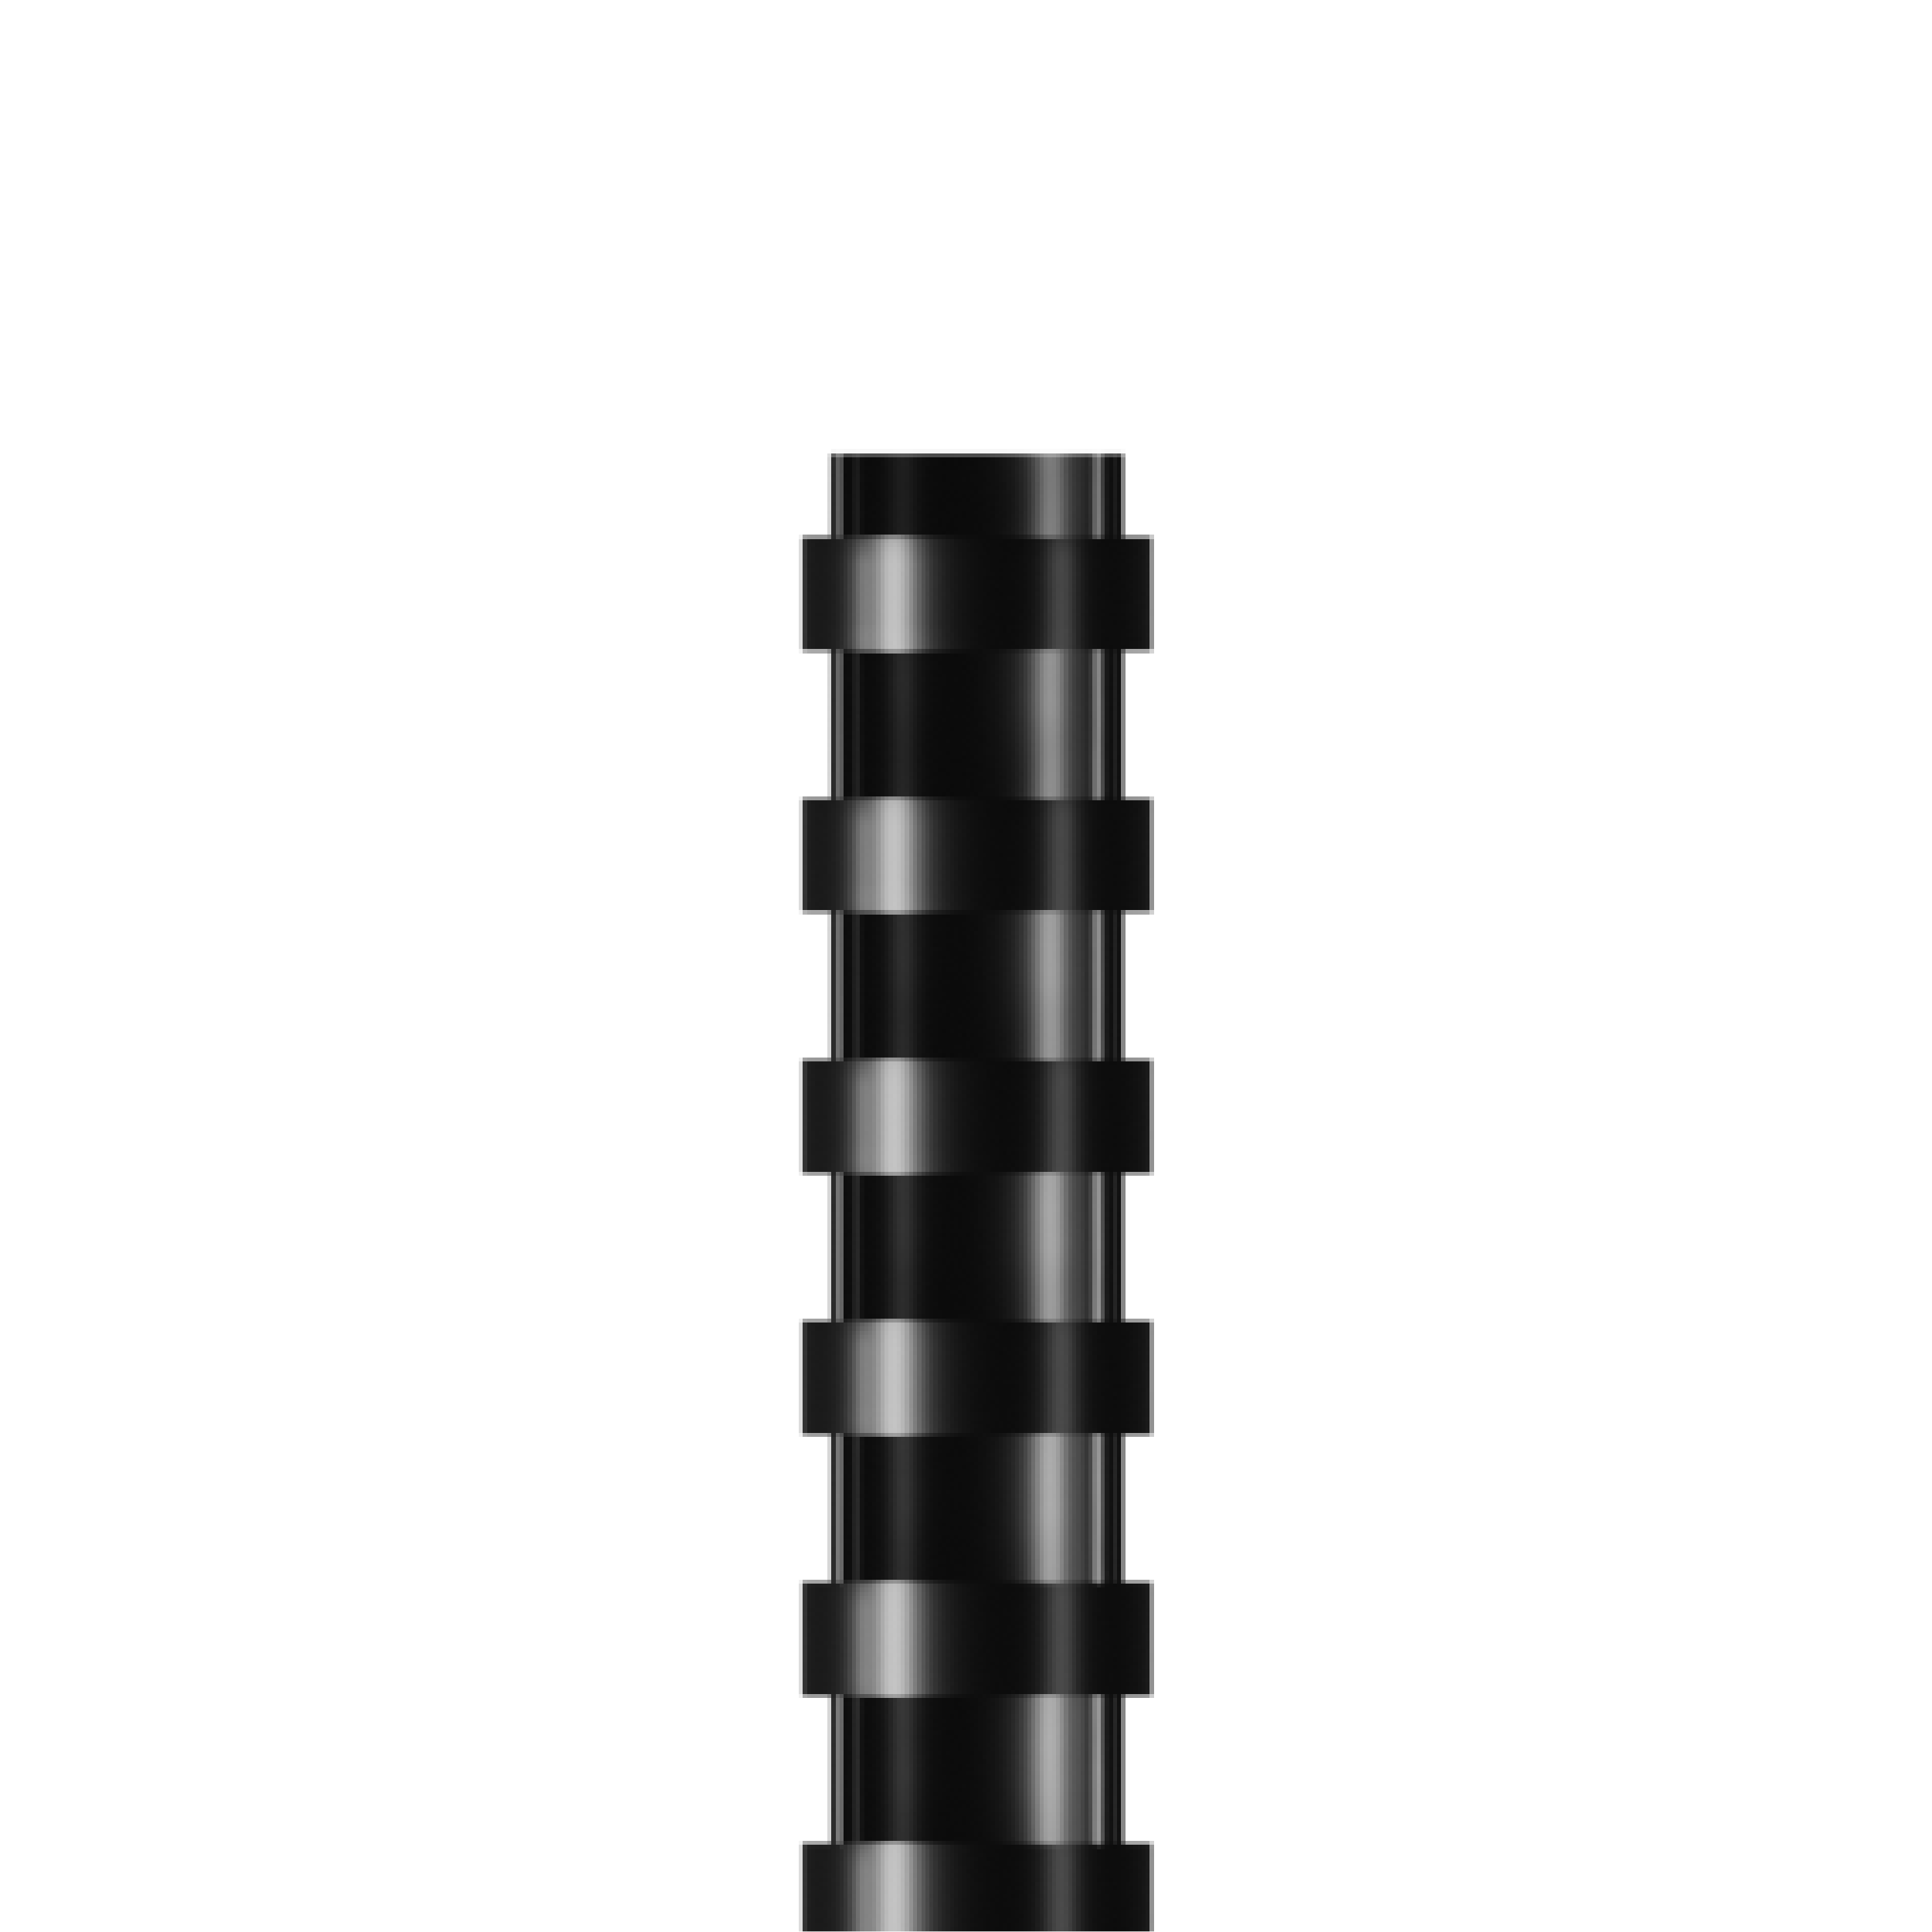 RAADO 18mm Plastic Spiral Binding Comb, Black